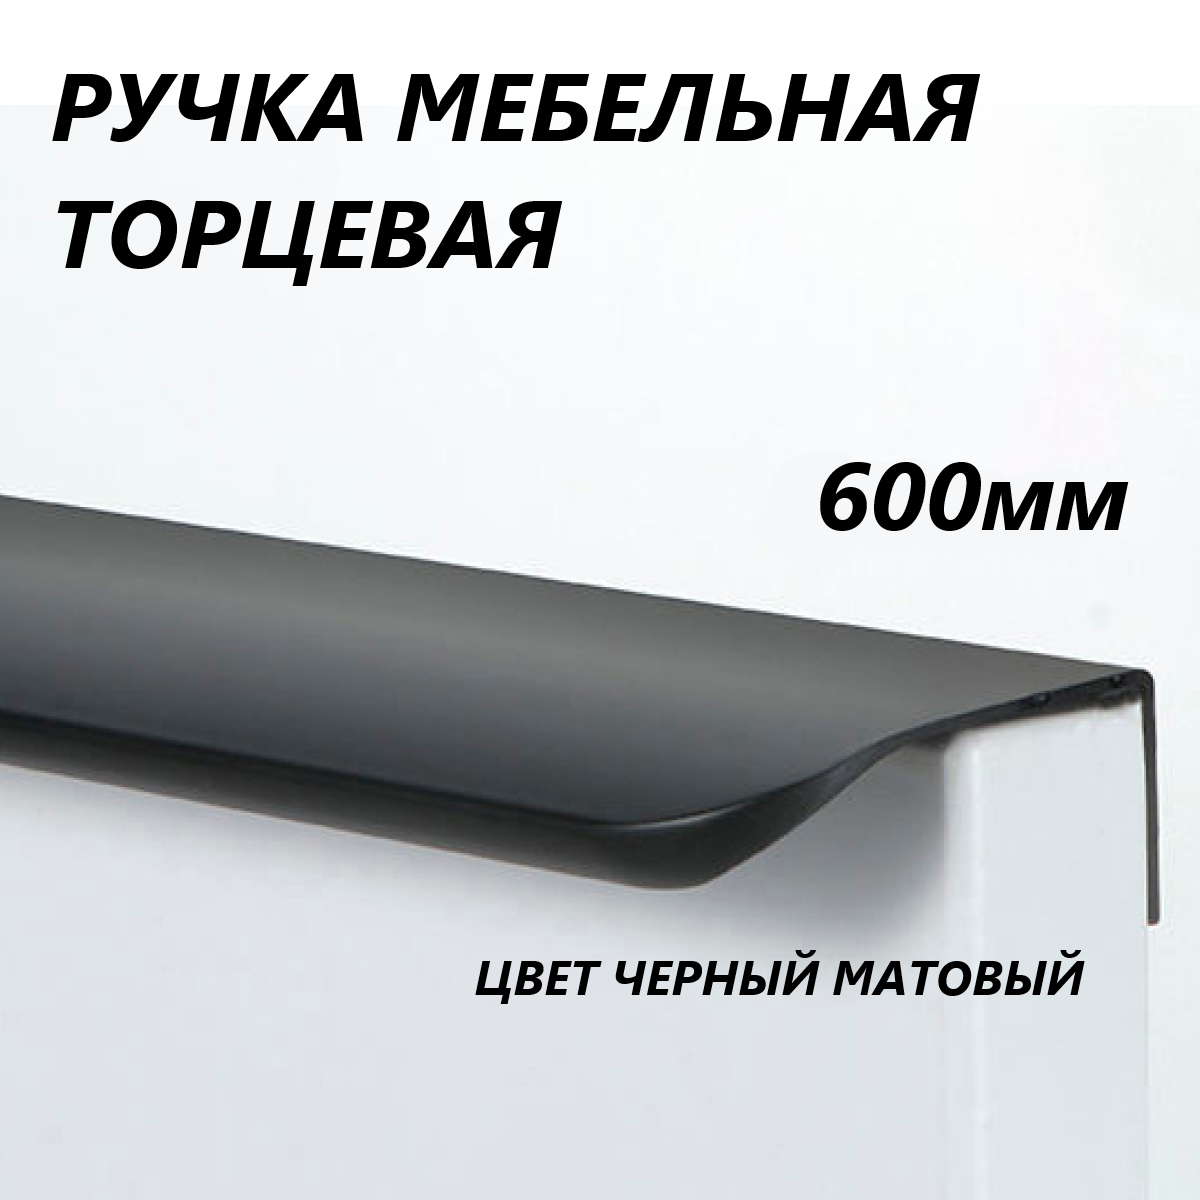 Ручка мебельная торцевая 600мм черная матовая